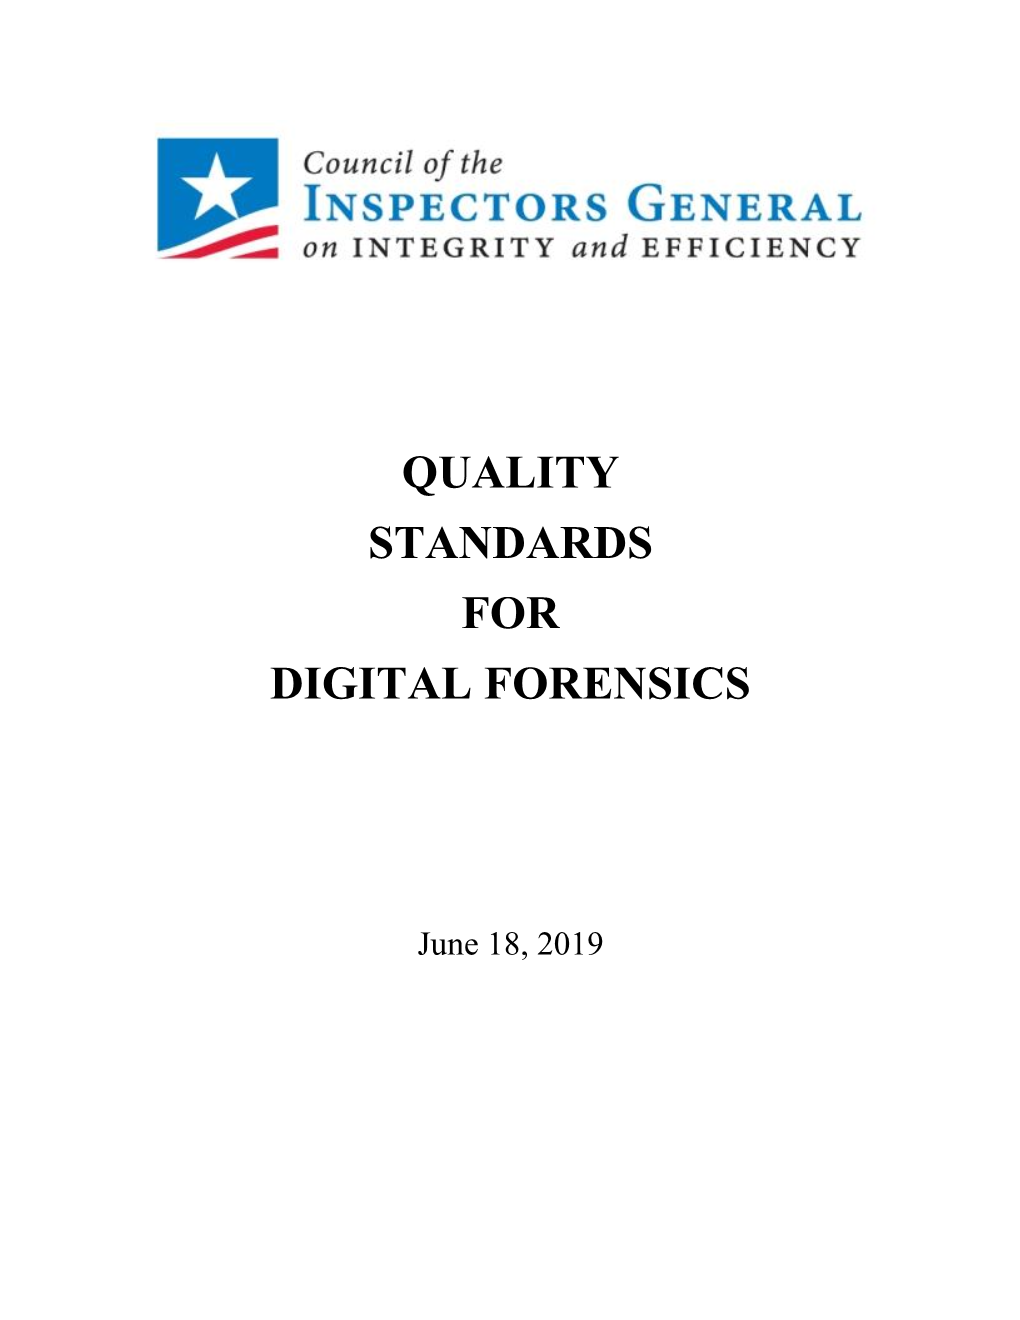 Quality Standards for Digital Forensics